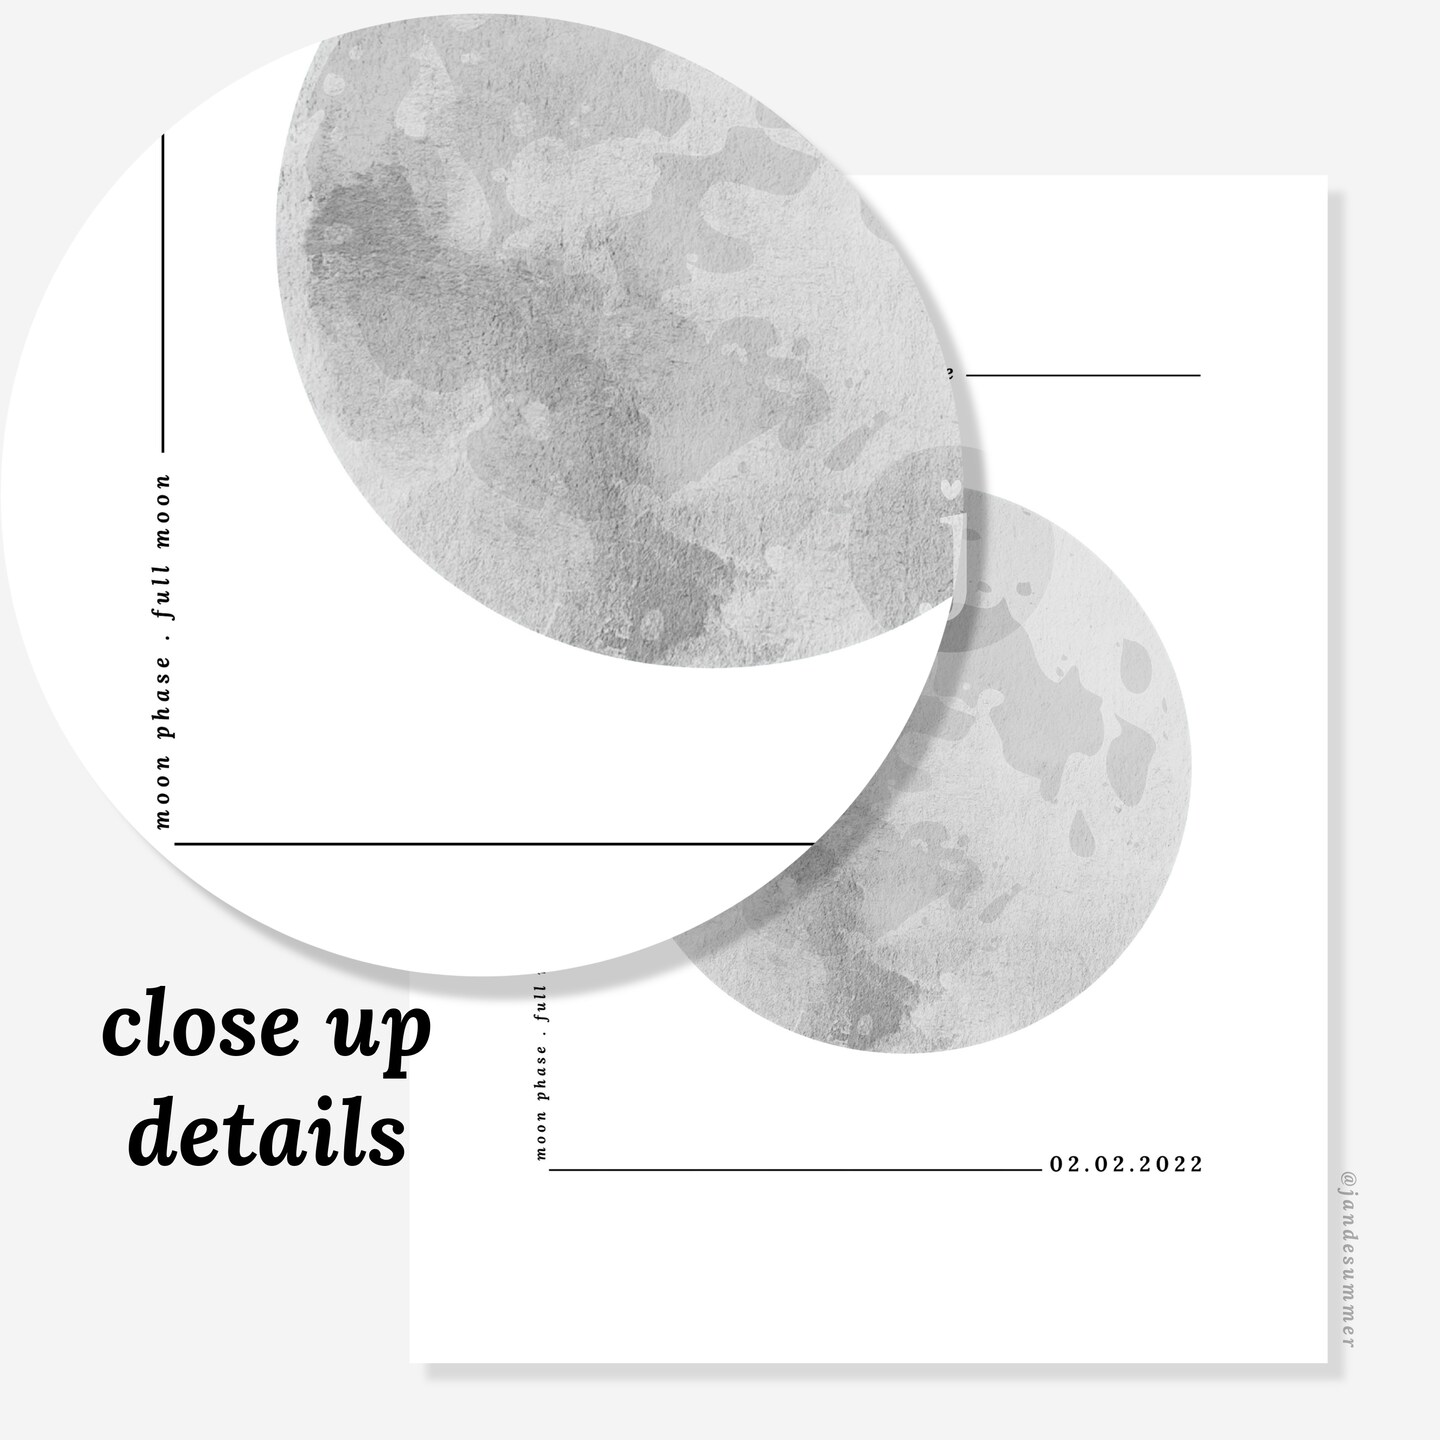 Birthday Moon Phase Poster - Custom Moon Phase Print